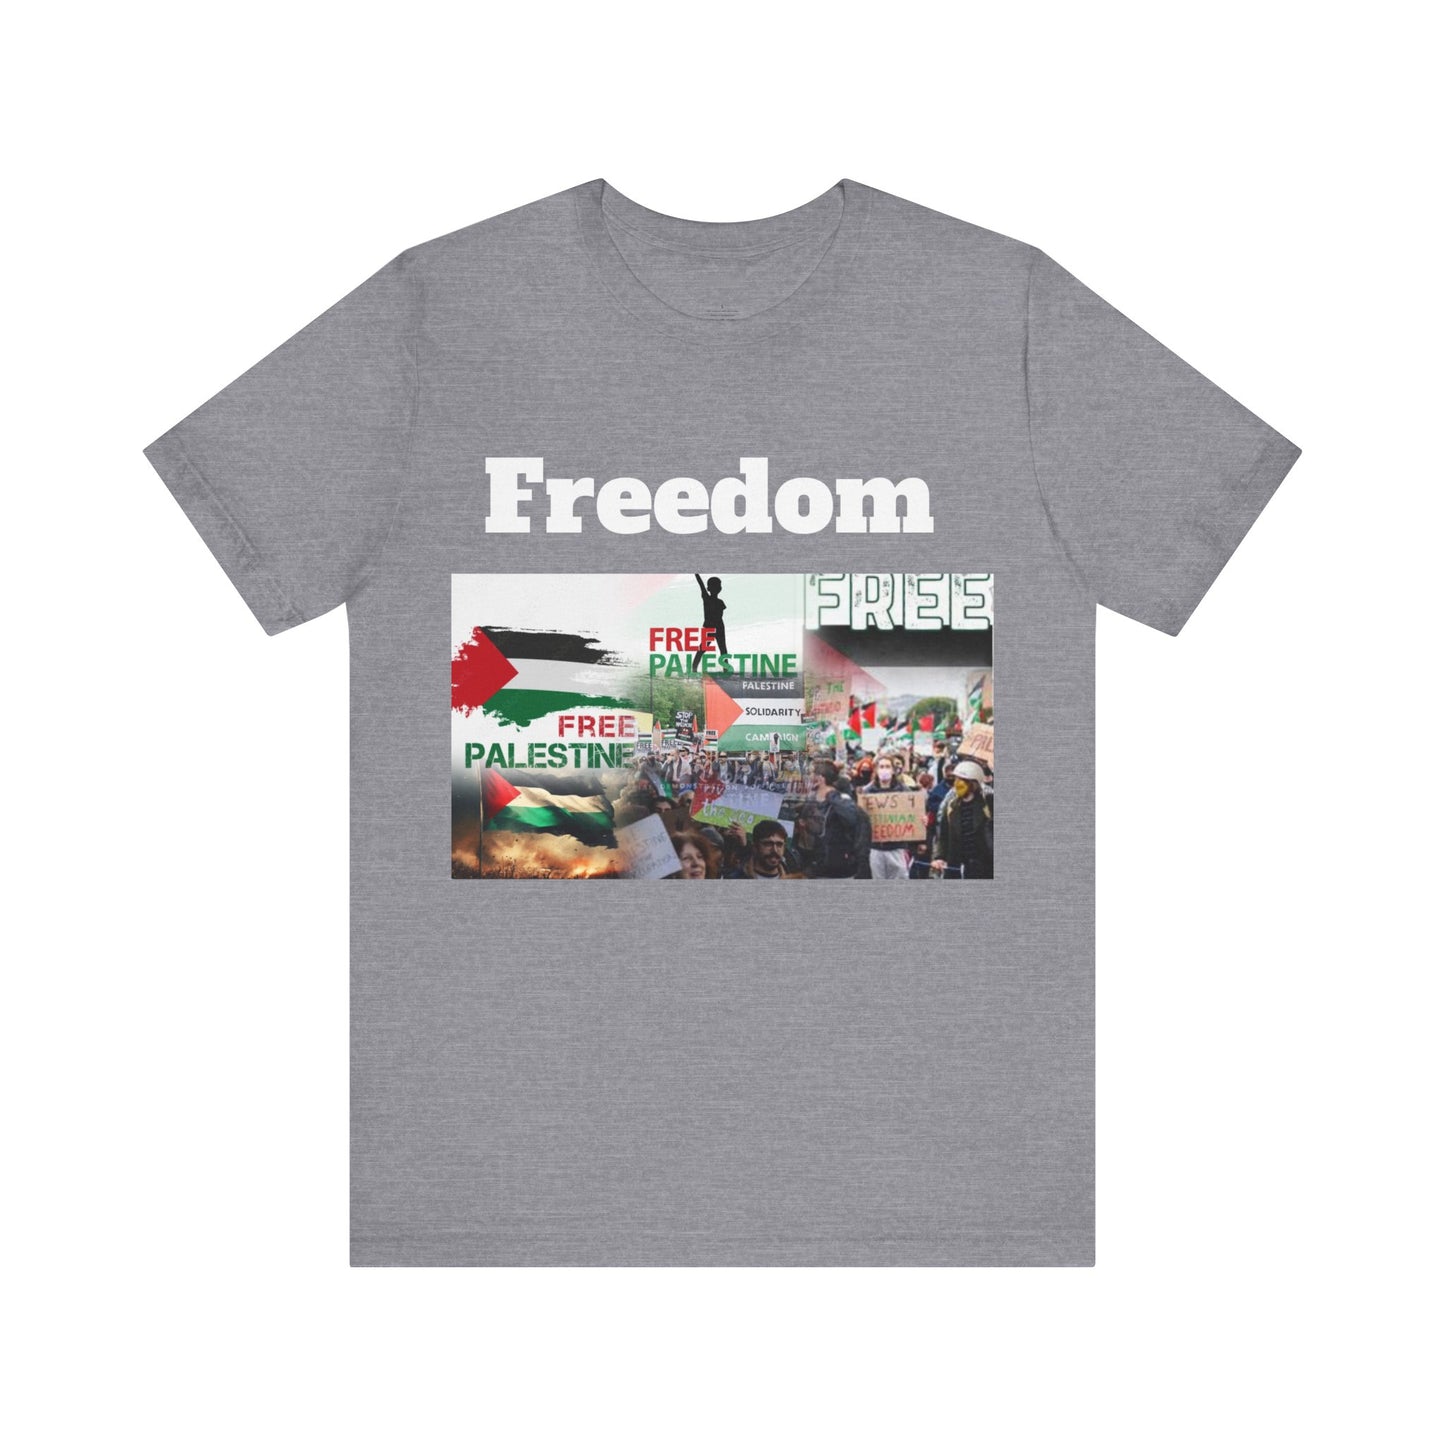 "Free Palestine" printed on a T-shirt